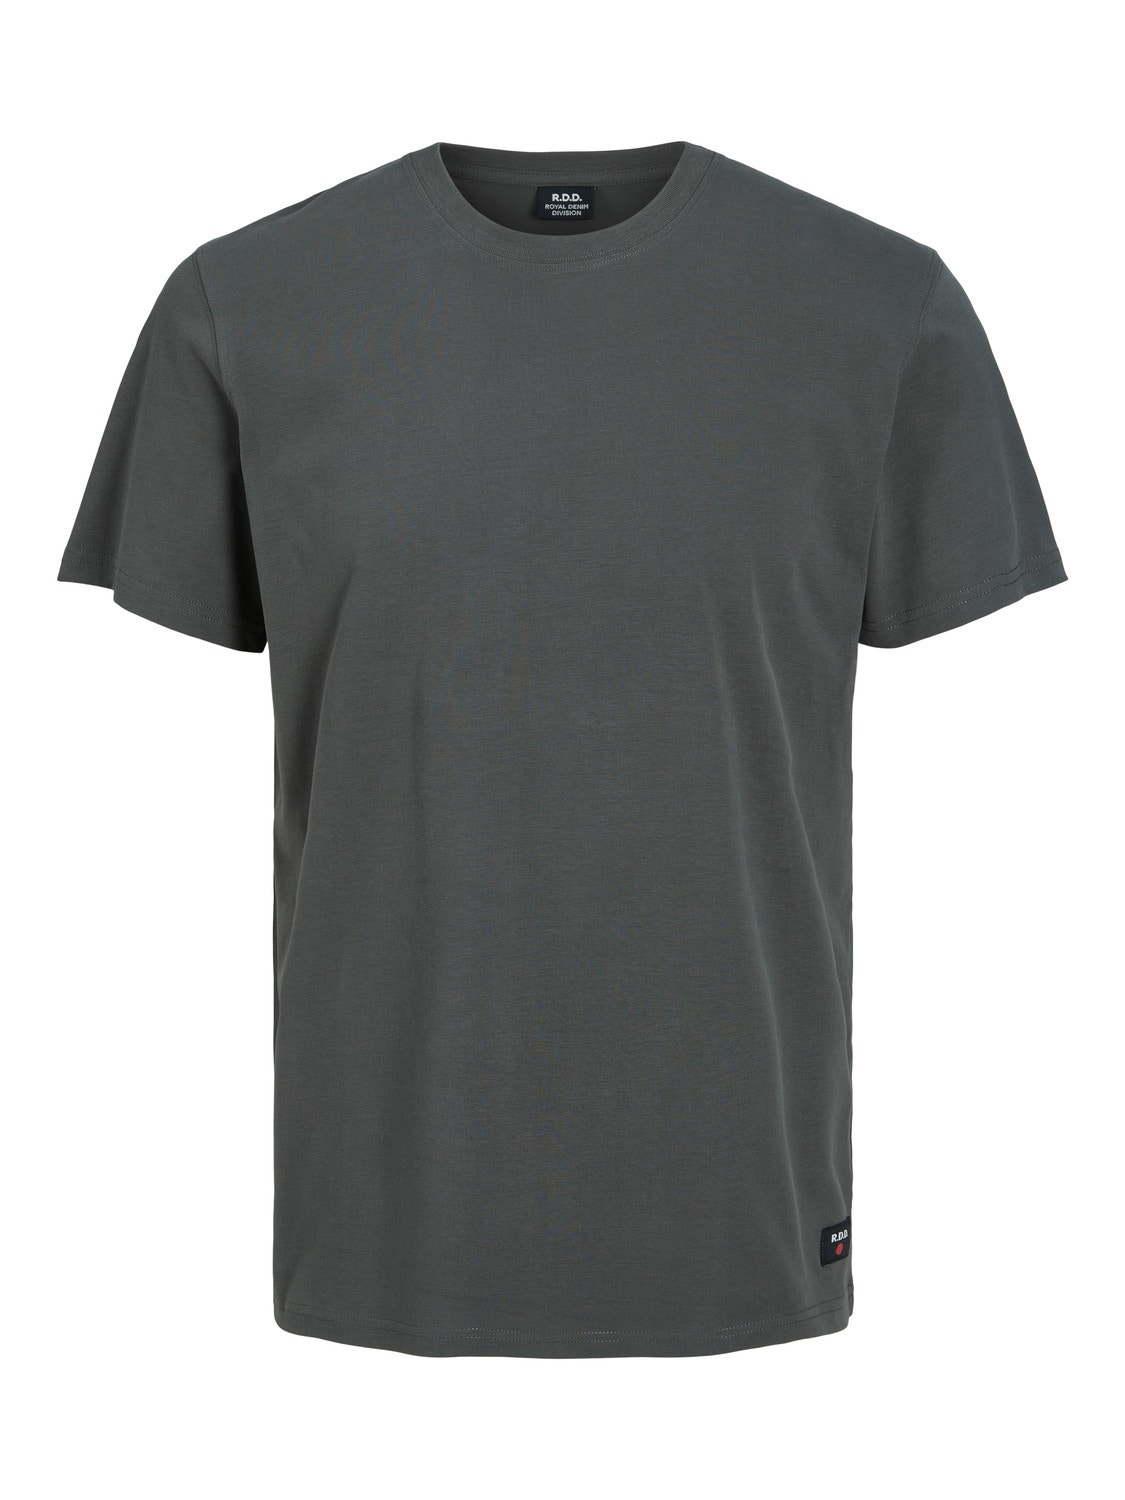 Jack & Jones RDD Plain Crew neck T-shirt -Peat - 12218240